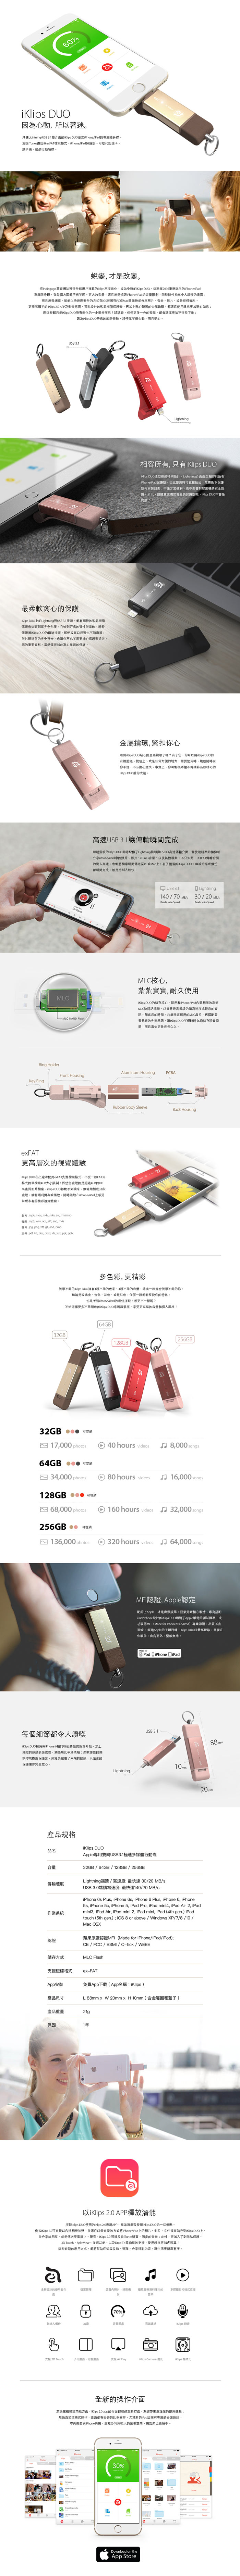 ADAM iKlips DUO USB 3.1 8pin 行動碟 128G (玫瑰金 )